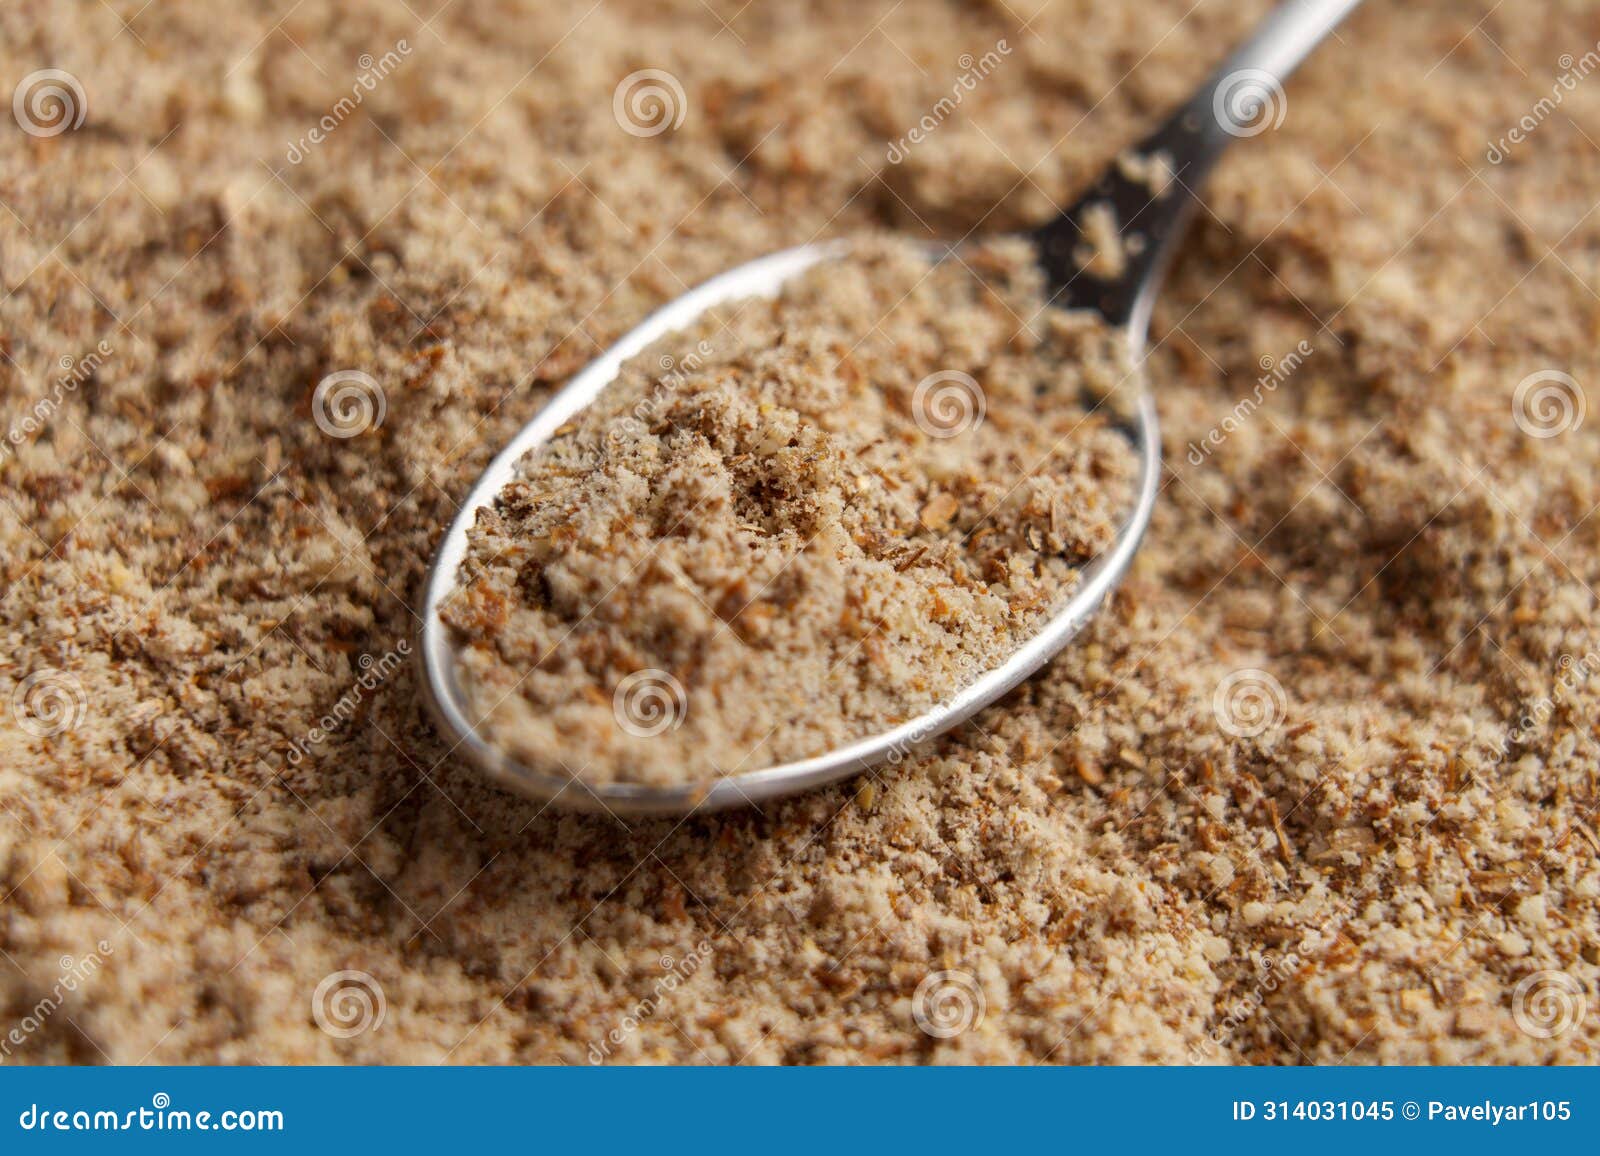 milk thistle seeds medicative powder in spoon. ground silybum marianum